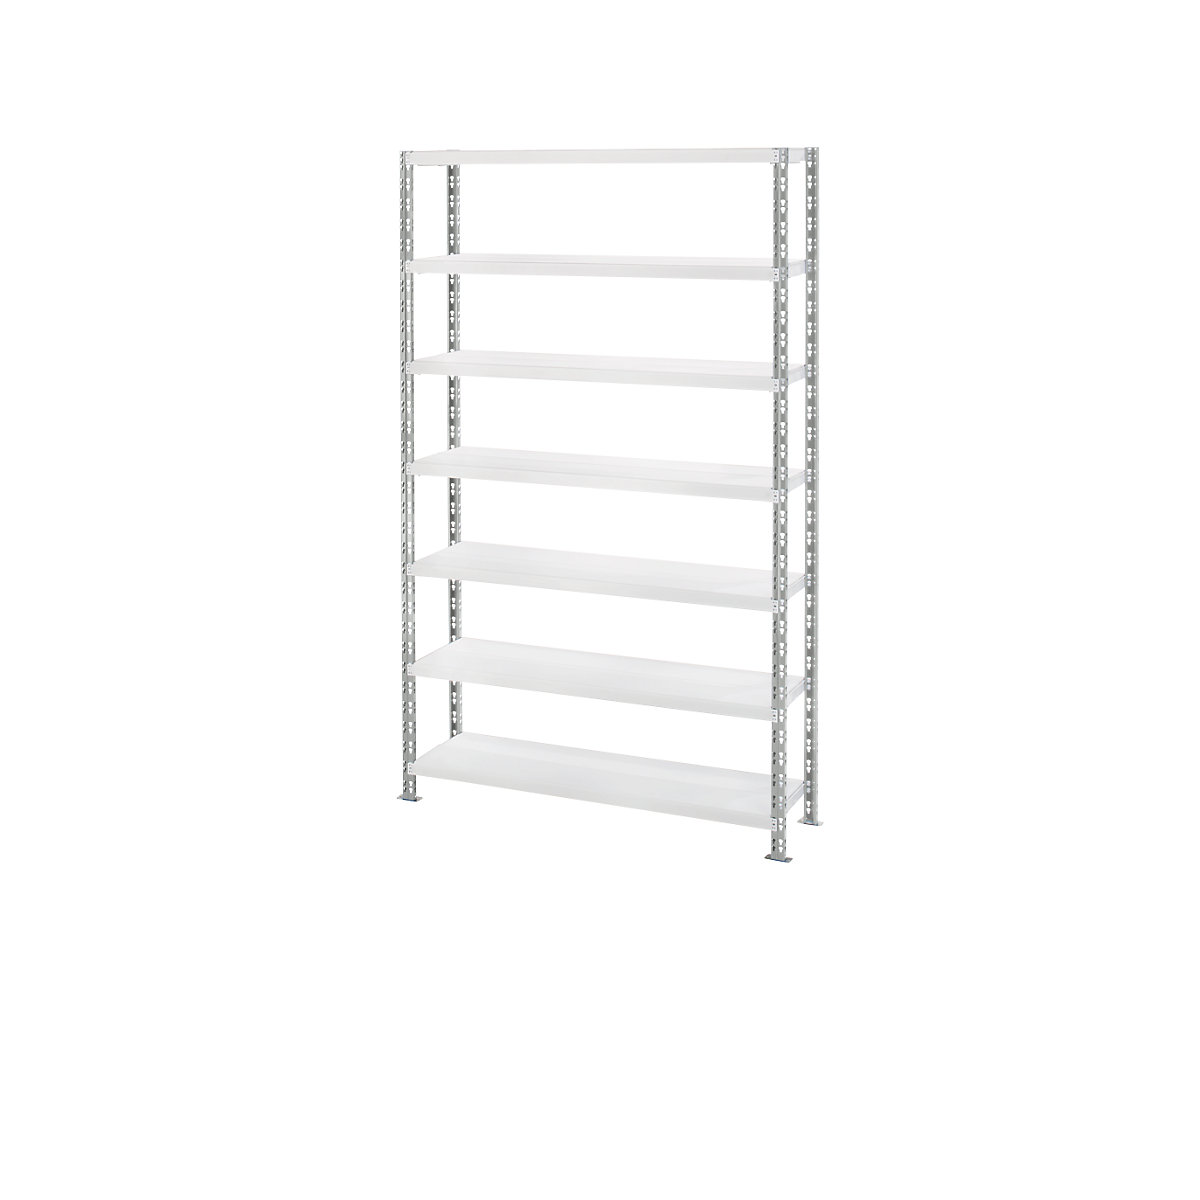 Wide span shelf unit with sheet steel shelves, depth 500 mm, standard shelf unit, HxW 2522 x 1550 mm